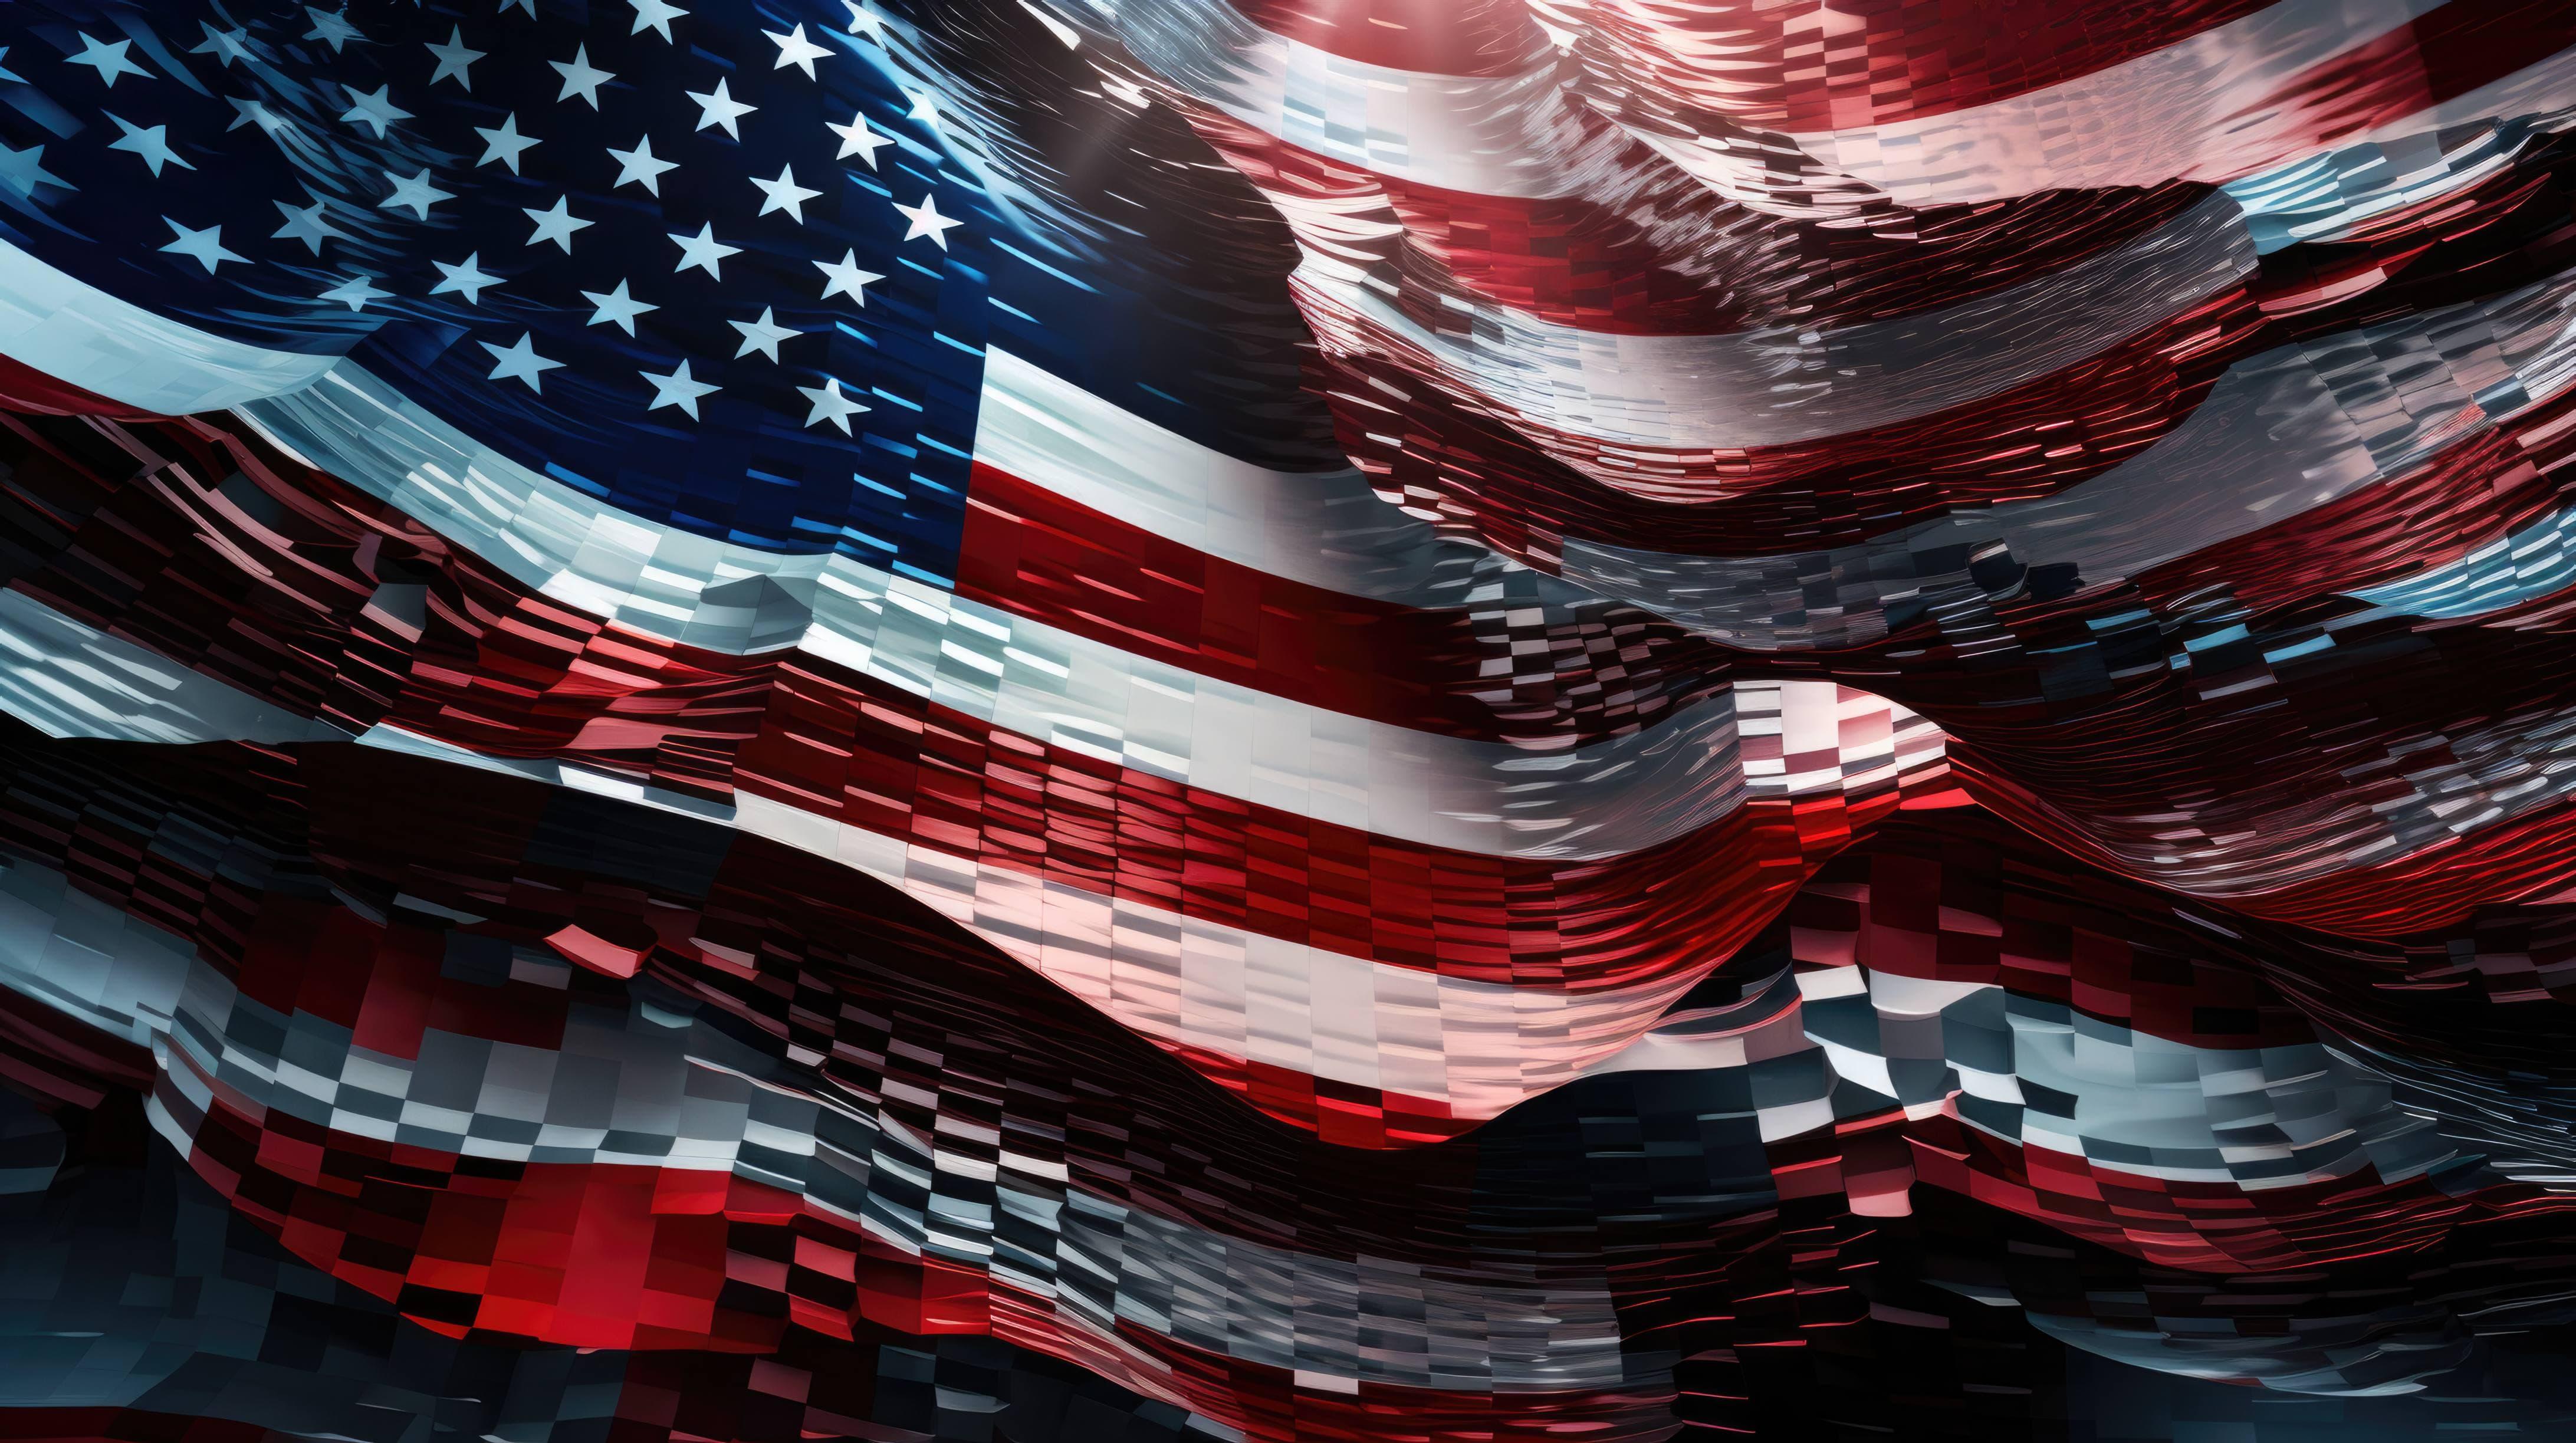 A 4k Desktop Wallpaper Of An American Flag Created From Digital Pixels